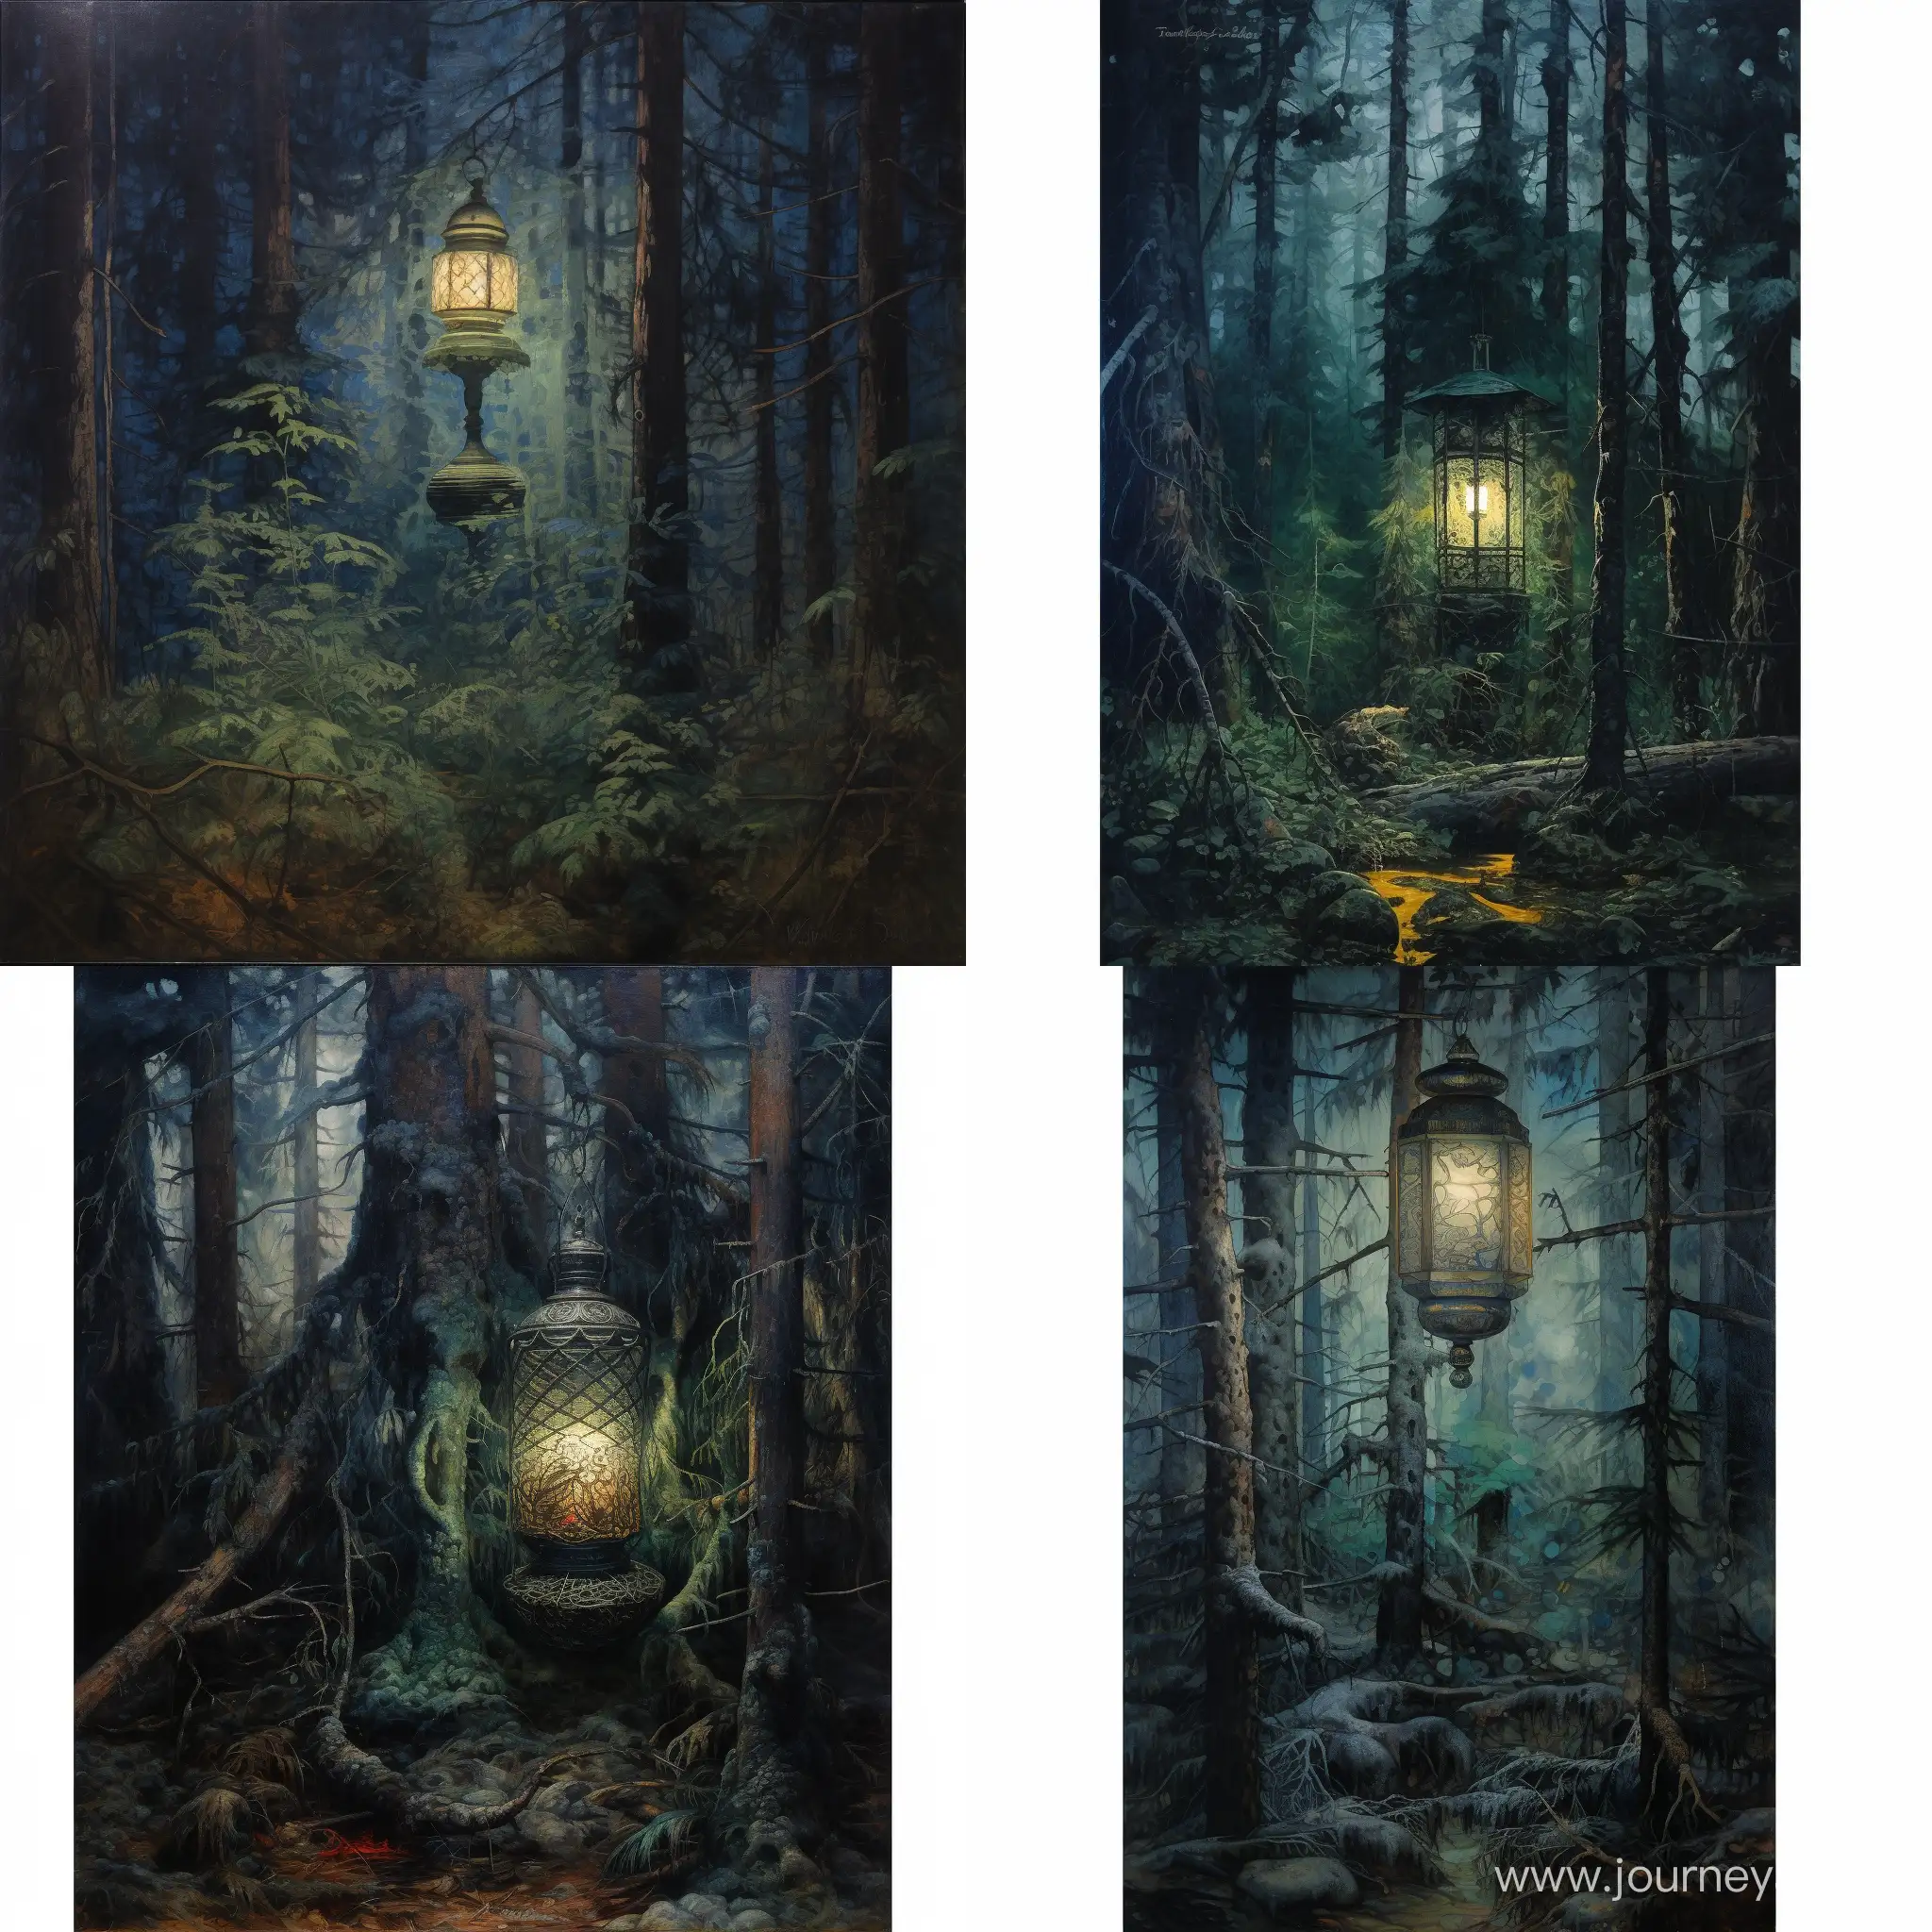 Enchanting-Night-Scene-Ancient-Lantern-Illuminates-a-Forest-Spirit-in-Pine-Clearing